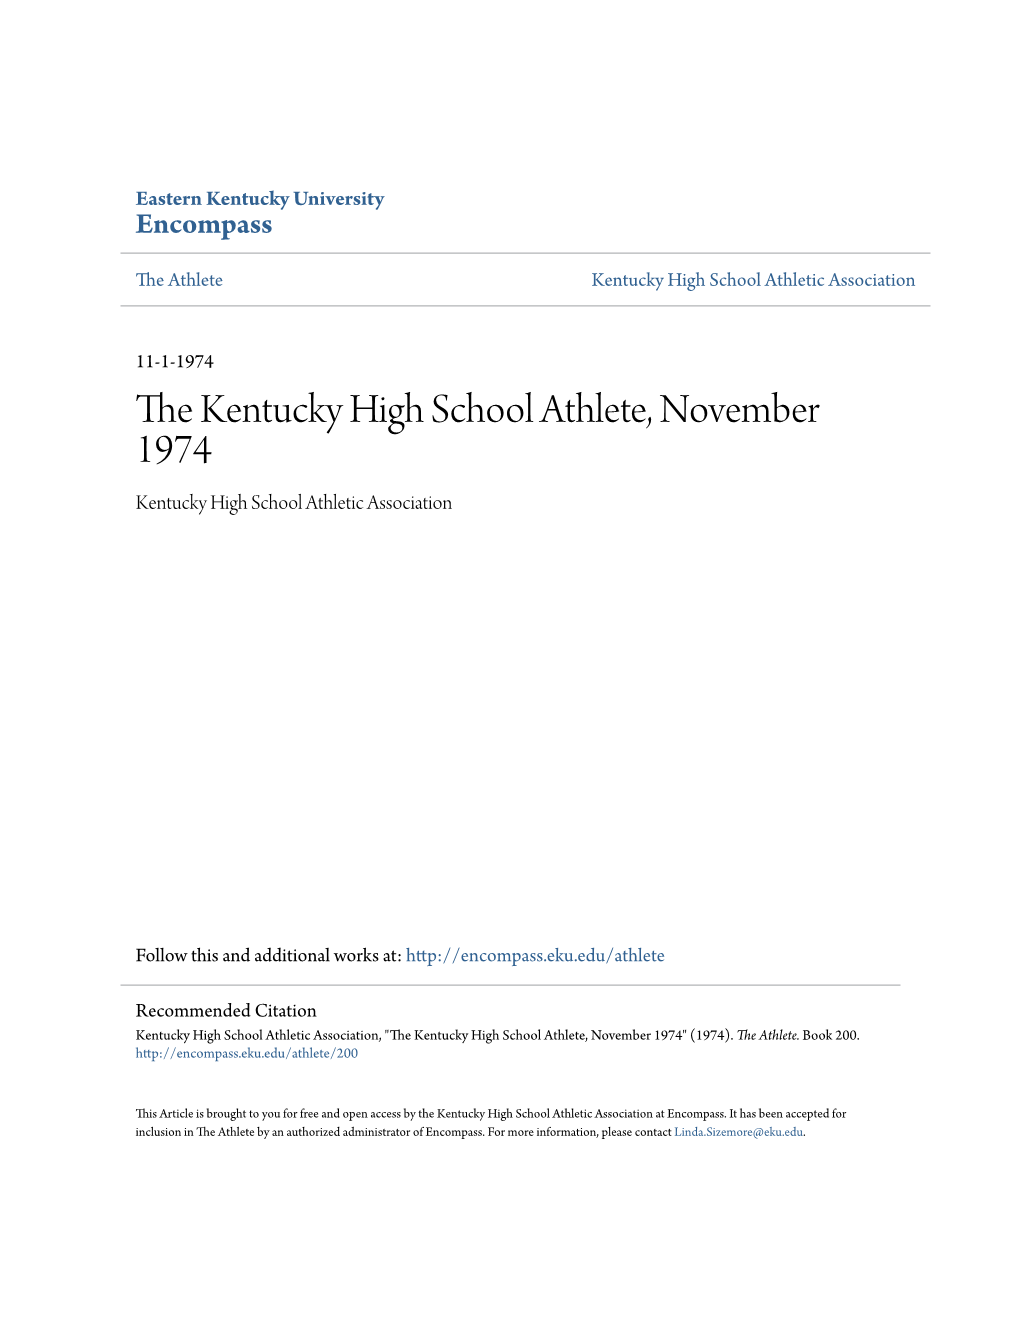 The Kentucky High School Athlete, November 1974 Kentucky High School Athletic Association